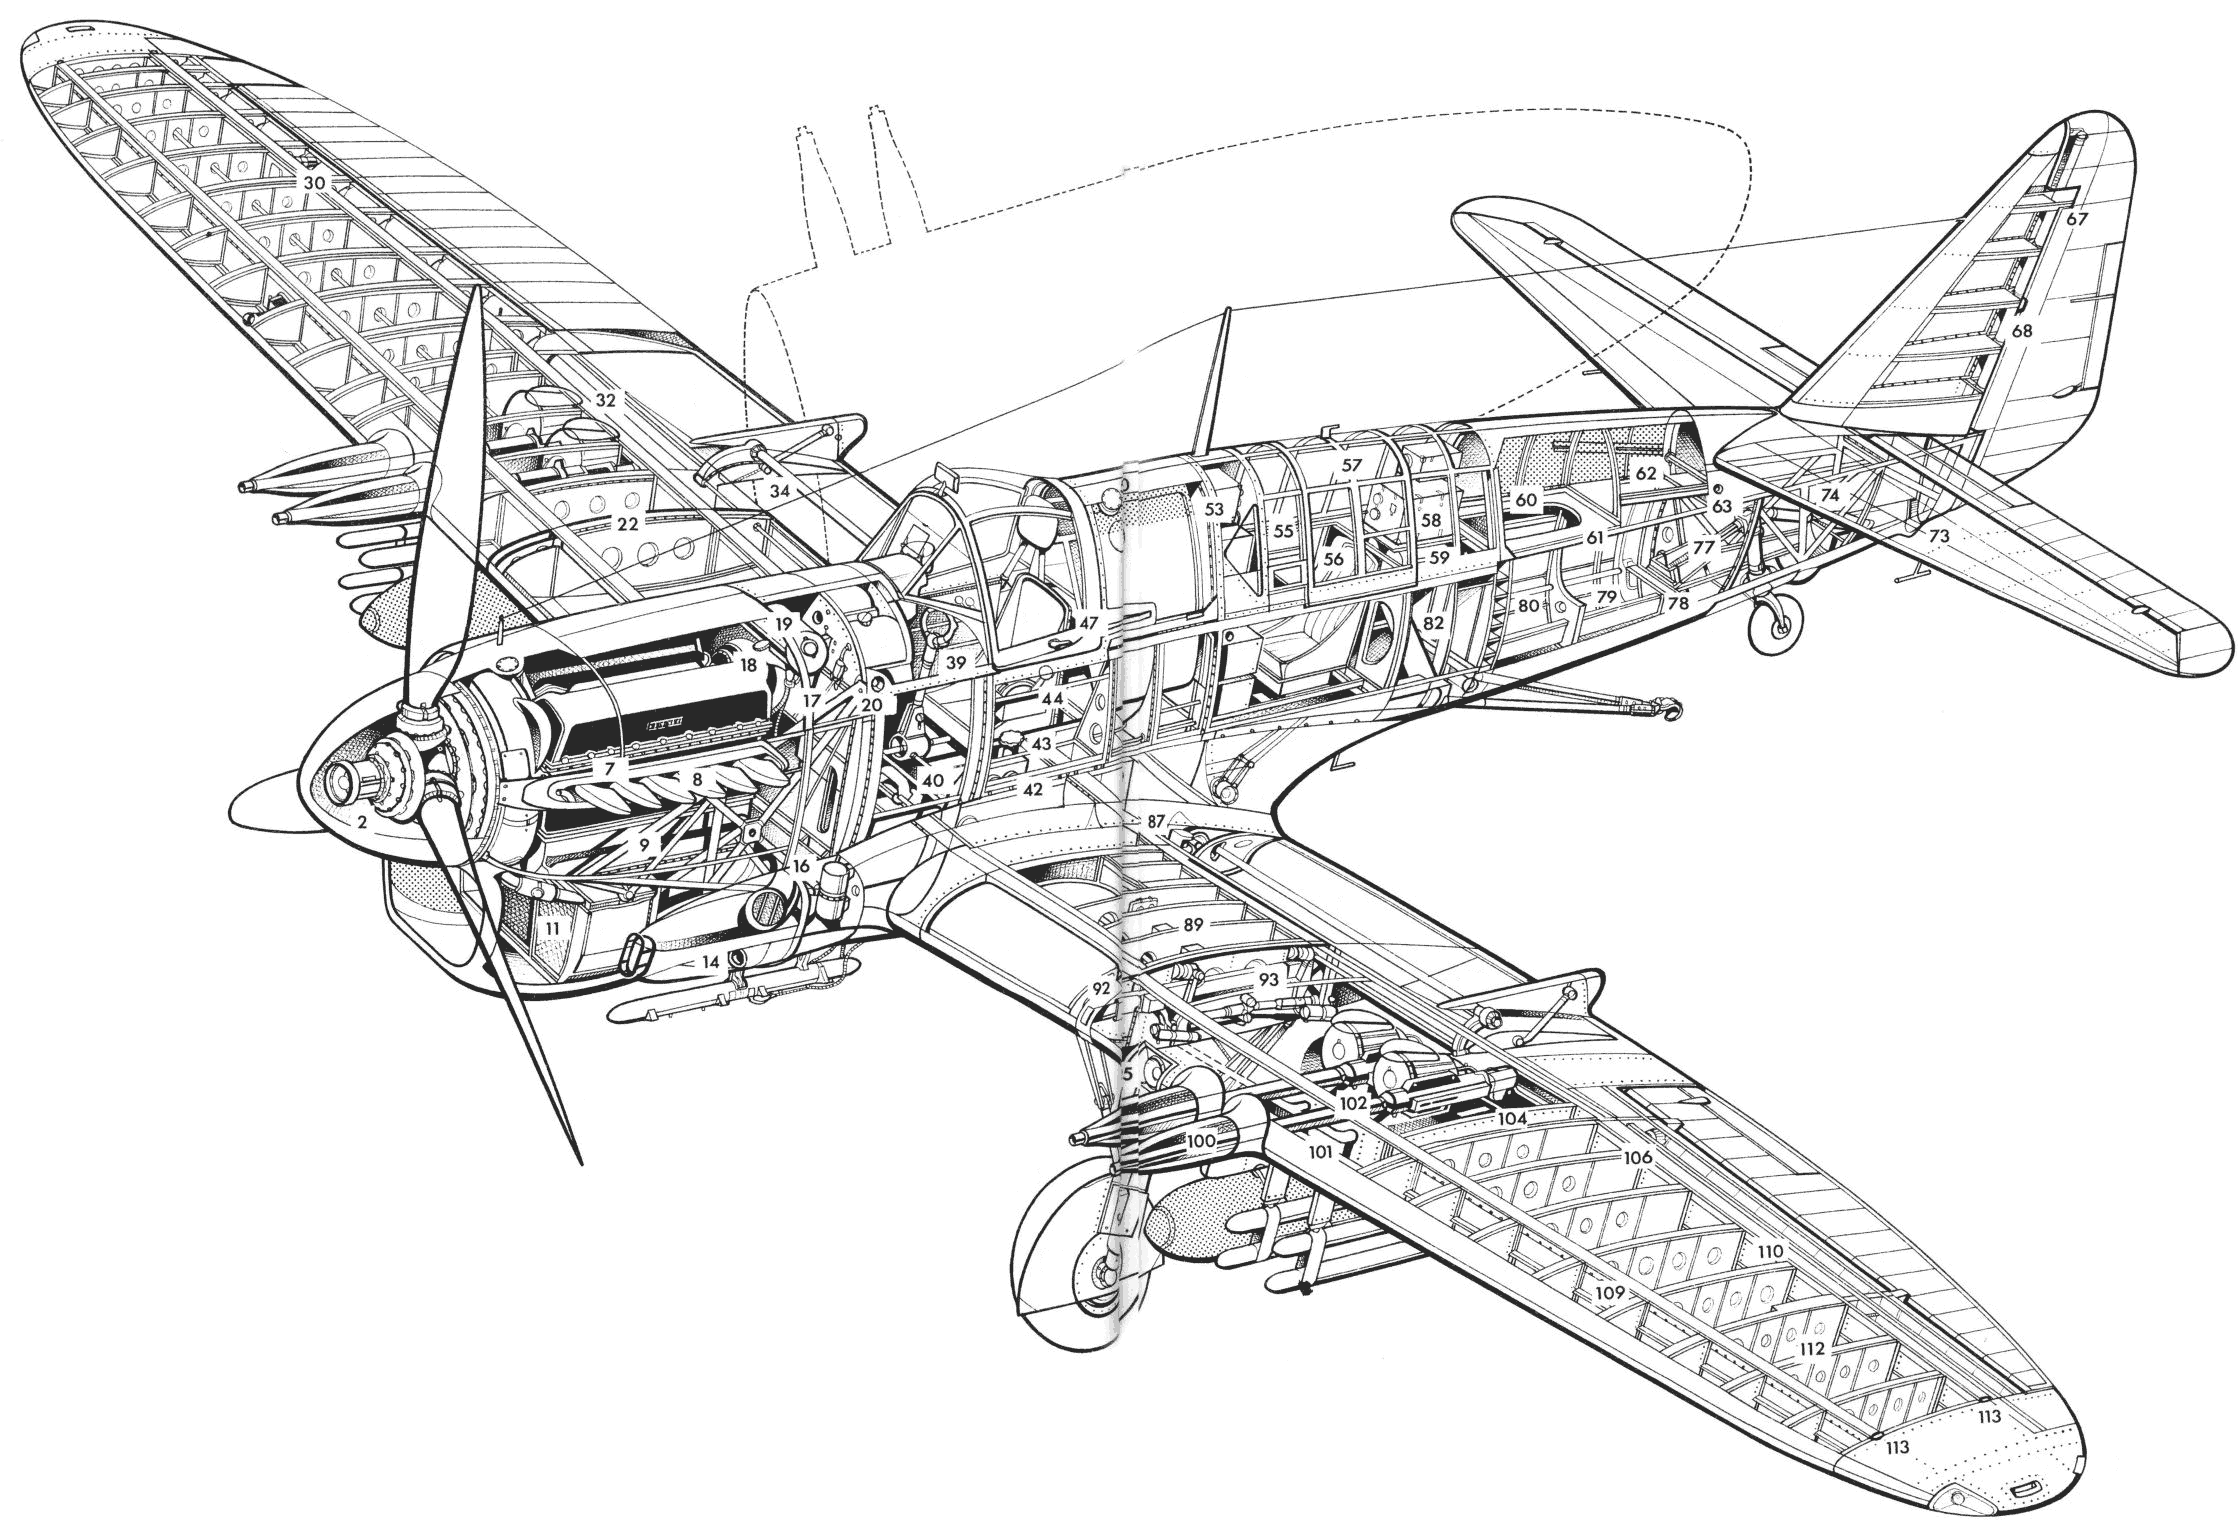 Fairey Firefly cutaway drawing